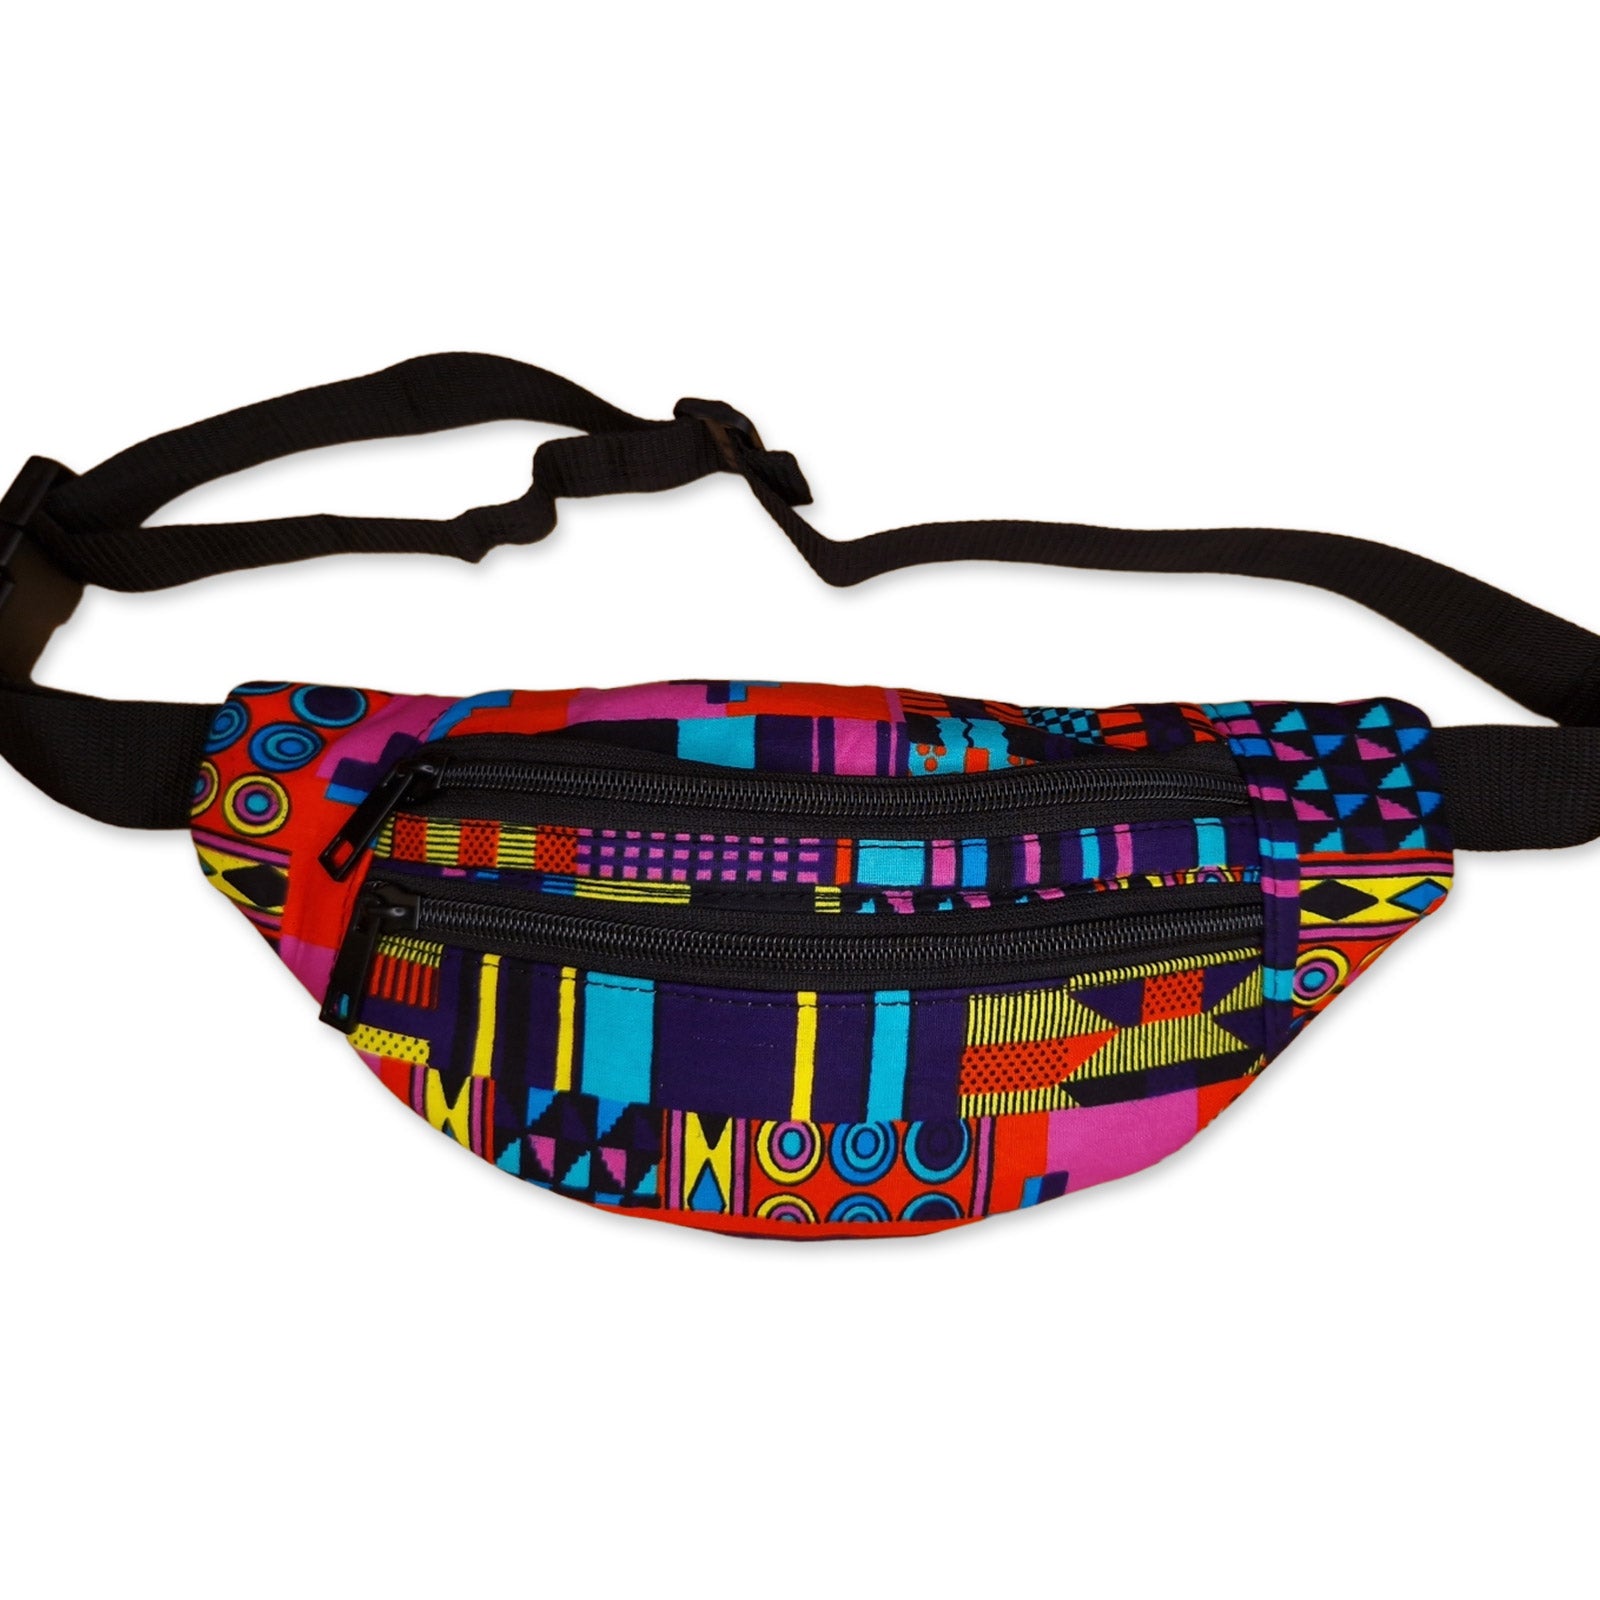 African Print Fanny Pack - Pink multicolor kente - Ankara Waist Bag / Bum bag / Festival Bag with Adjustable strap